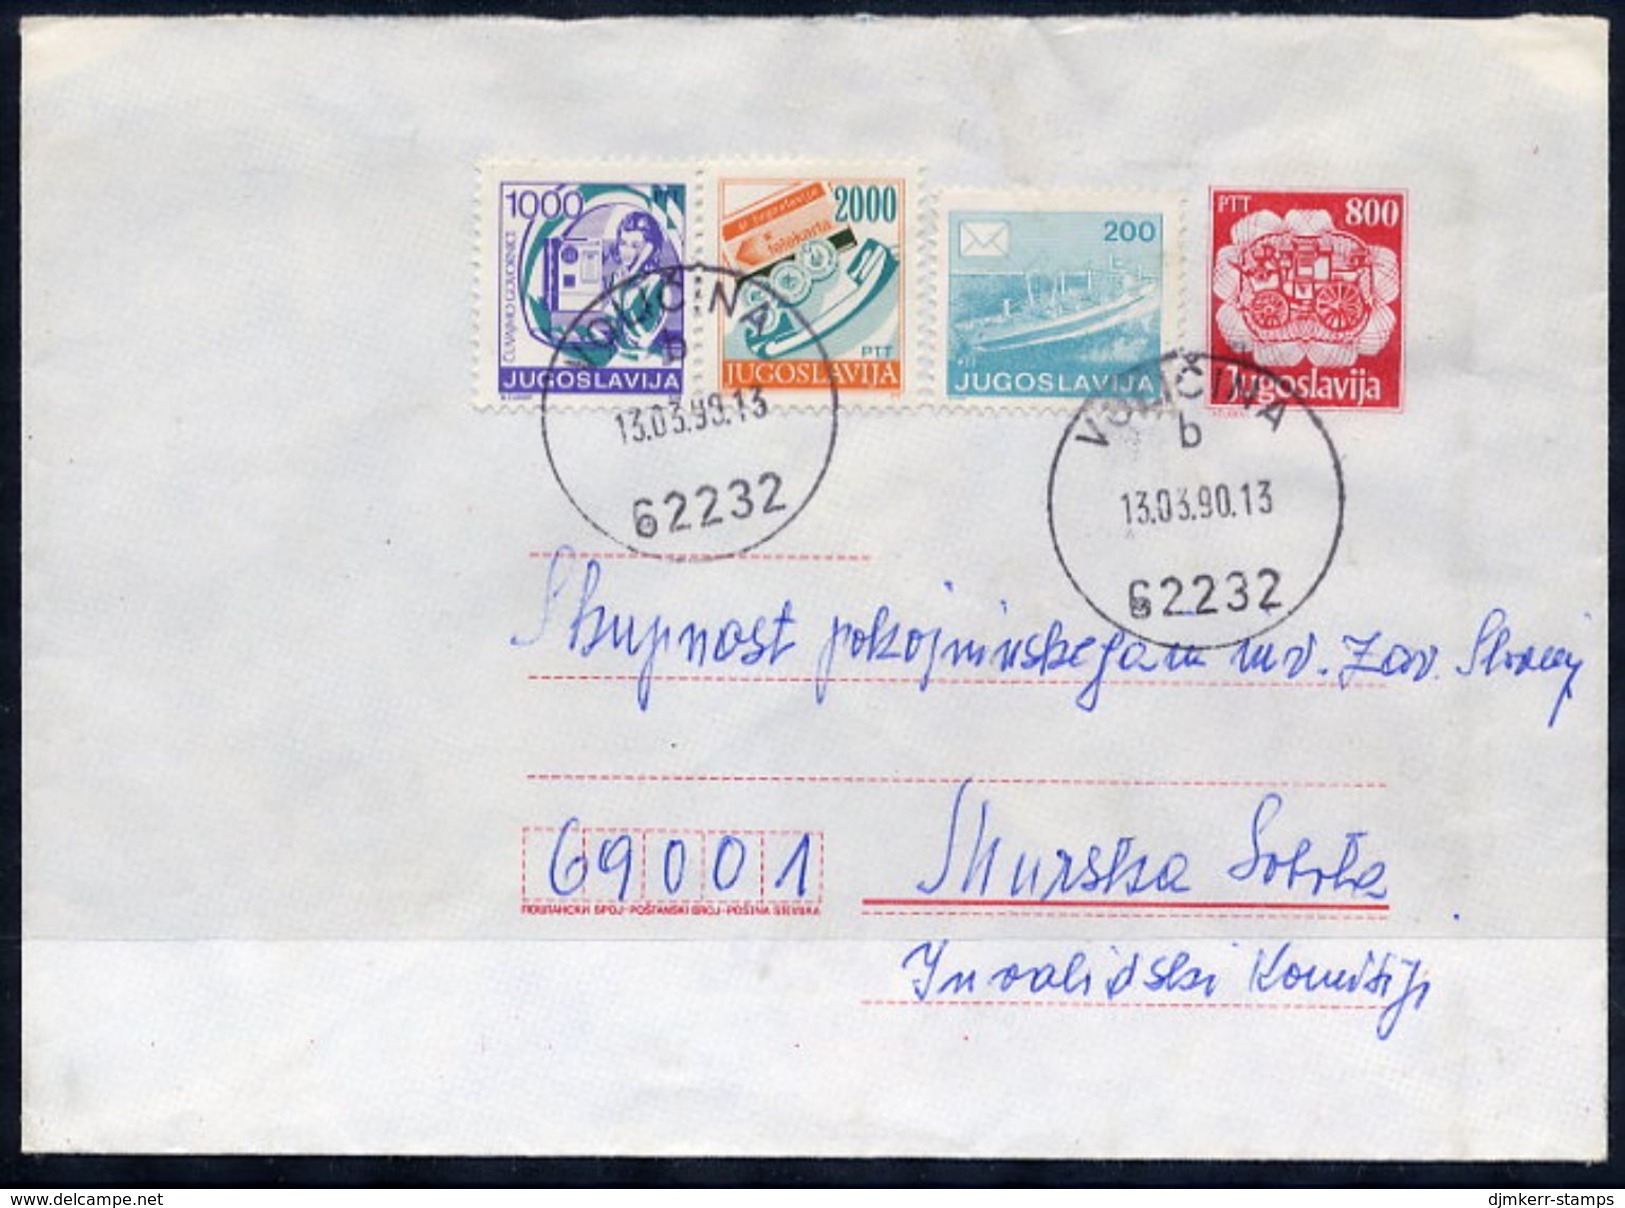 YUGOSLAVIA 1989 Mailcoach 800 D. Envelope Used With Additional Franking.  Michel U91 - Ganzsachen